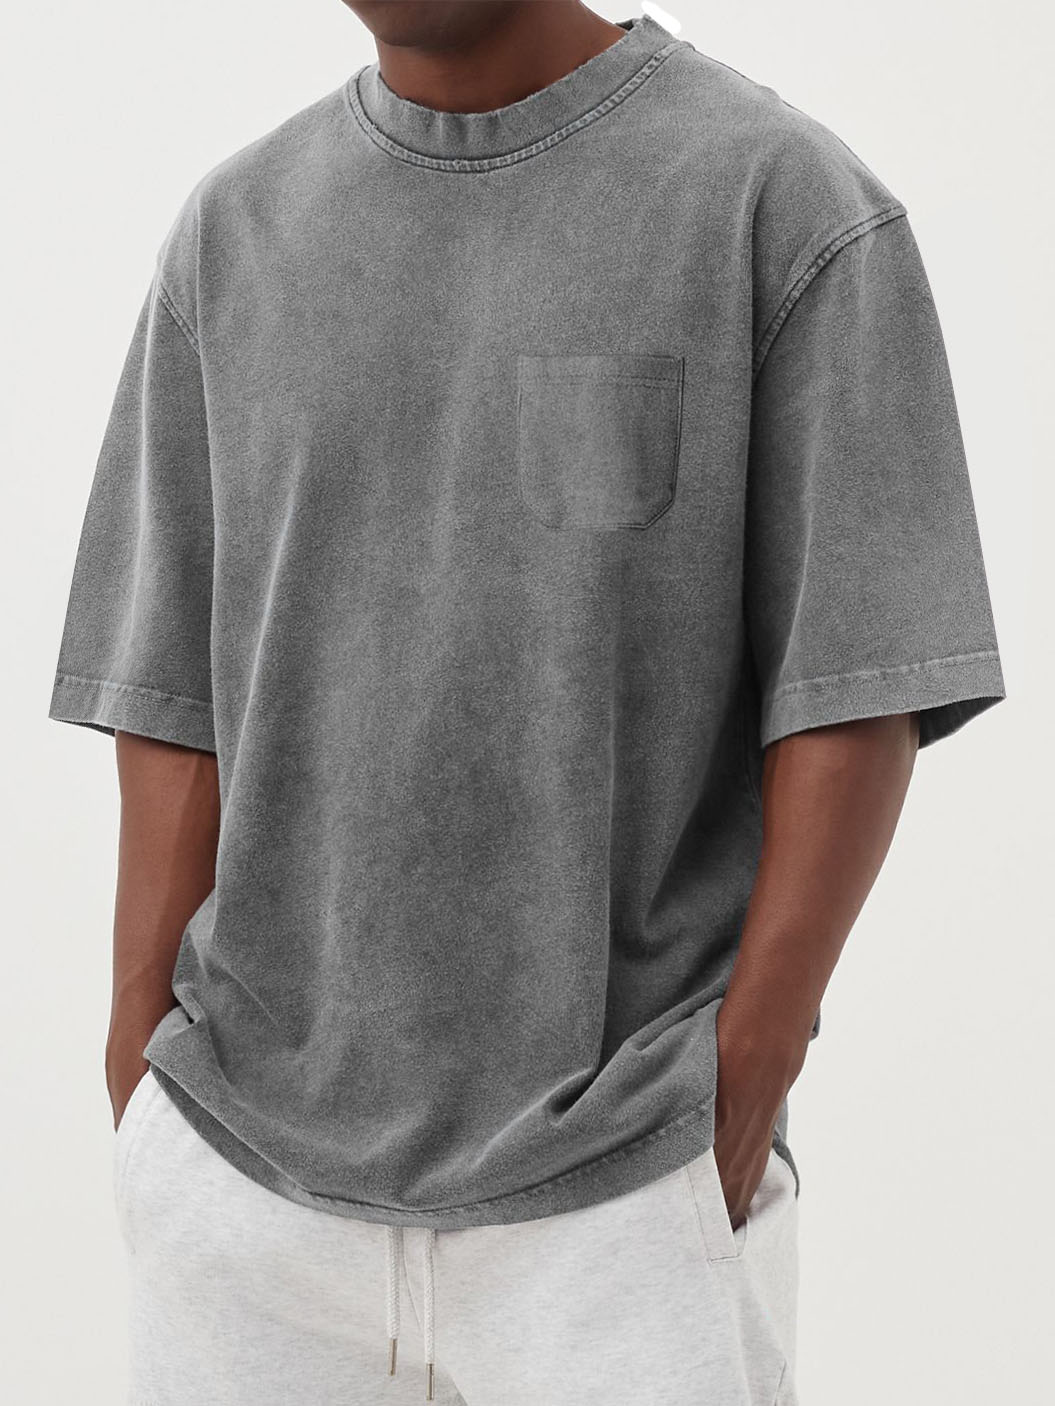 Men's Pocket Cotton Washed Distressed Batik Casual Short Sleeve T-Shirt